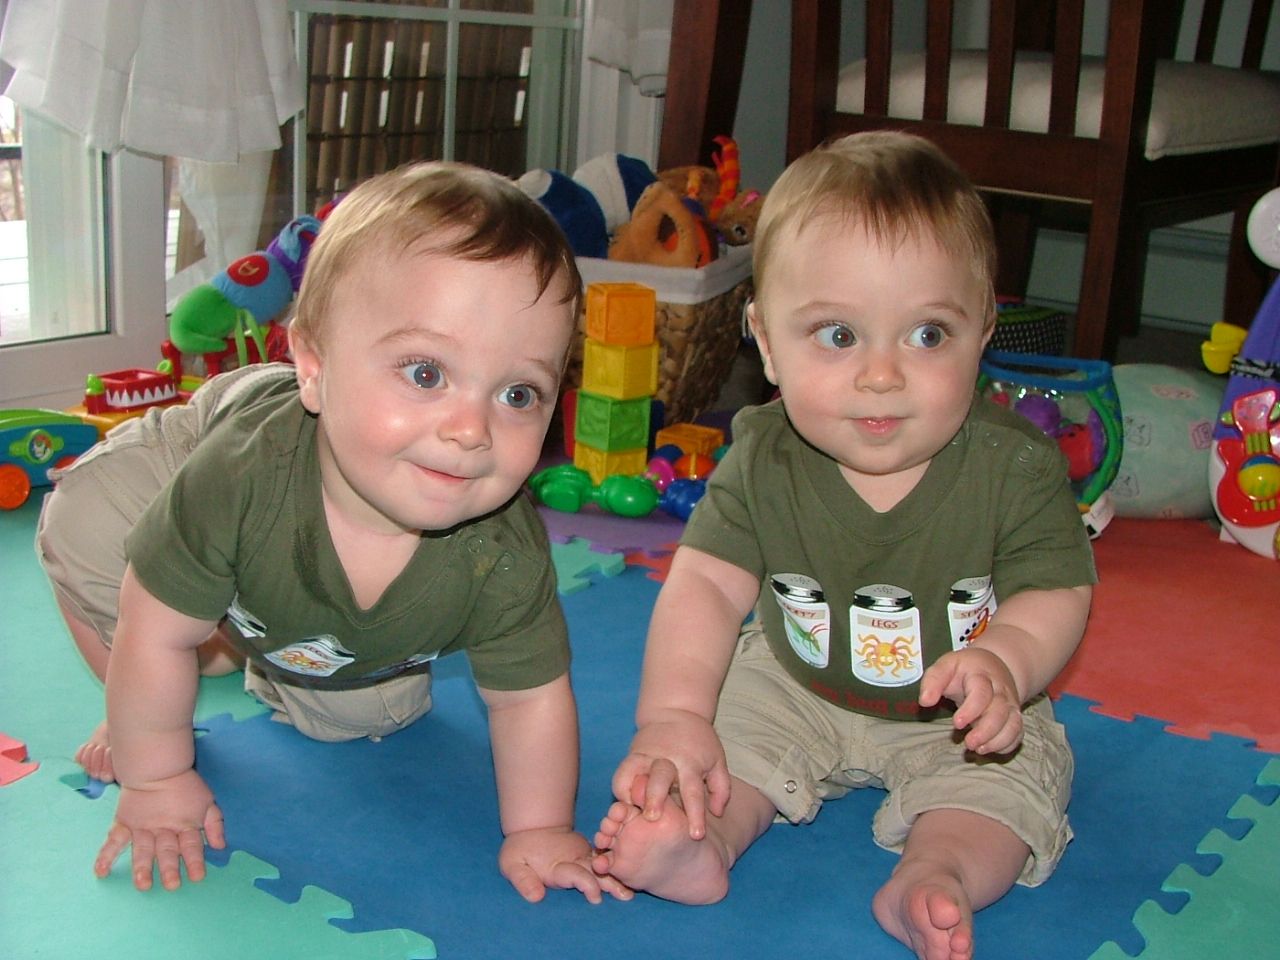 8. Mirror Image Twins - Exact reflection twins